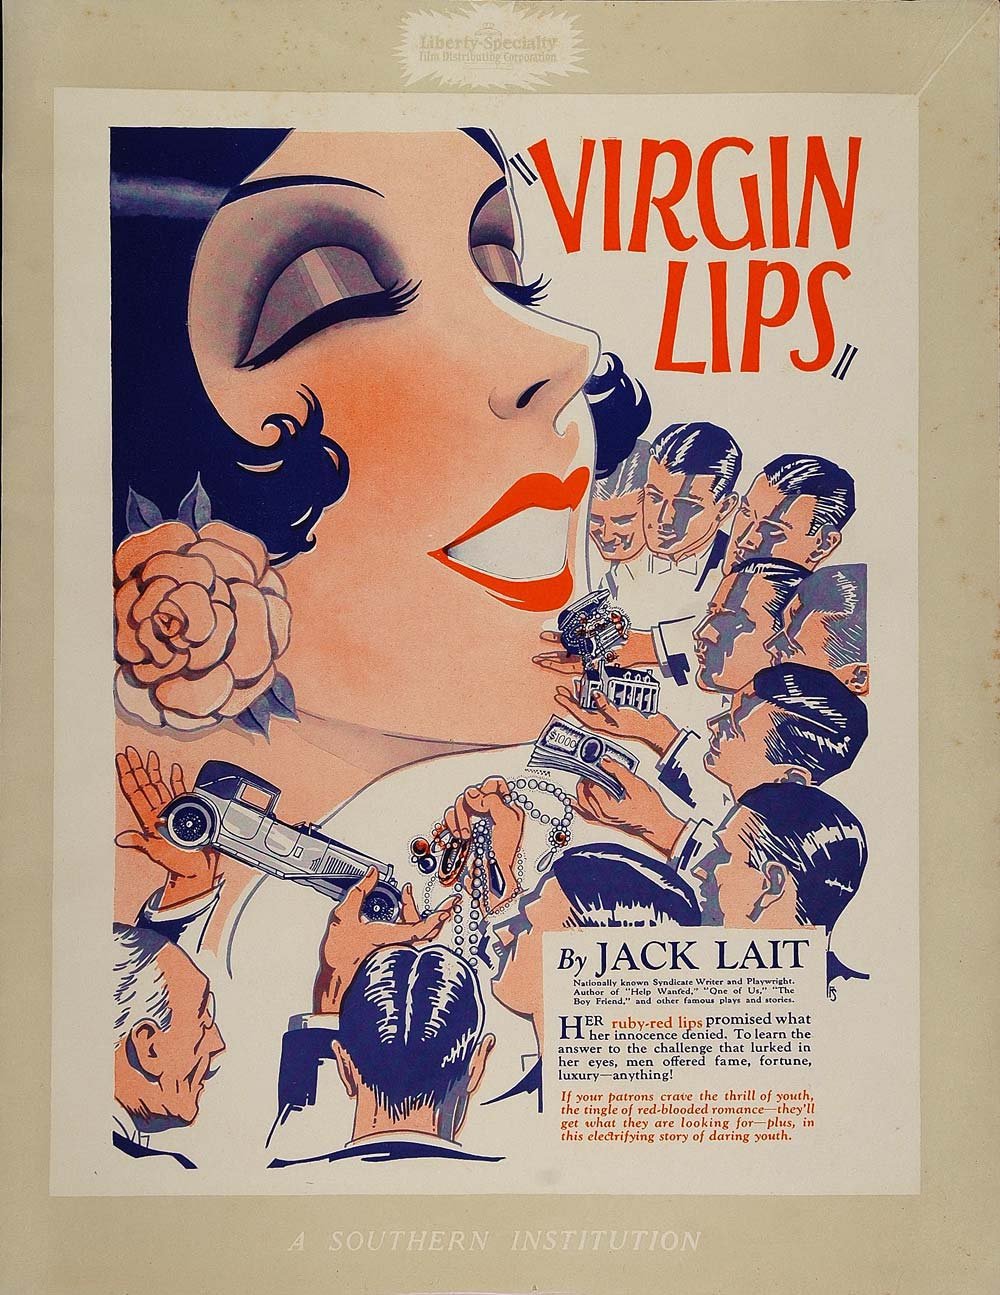 Virgin Lips